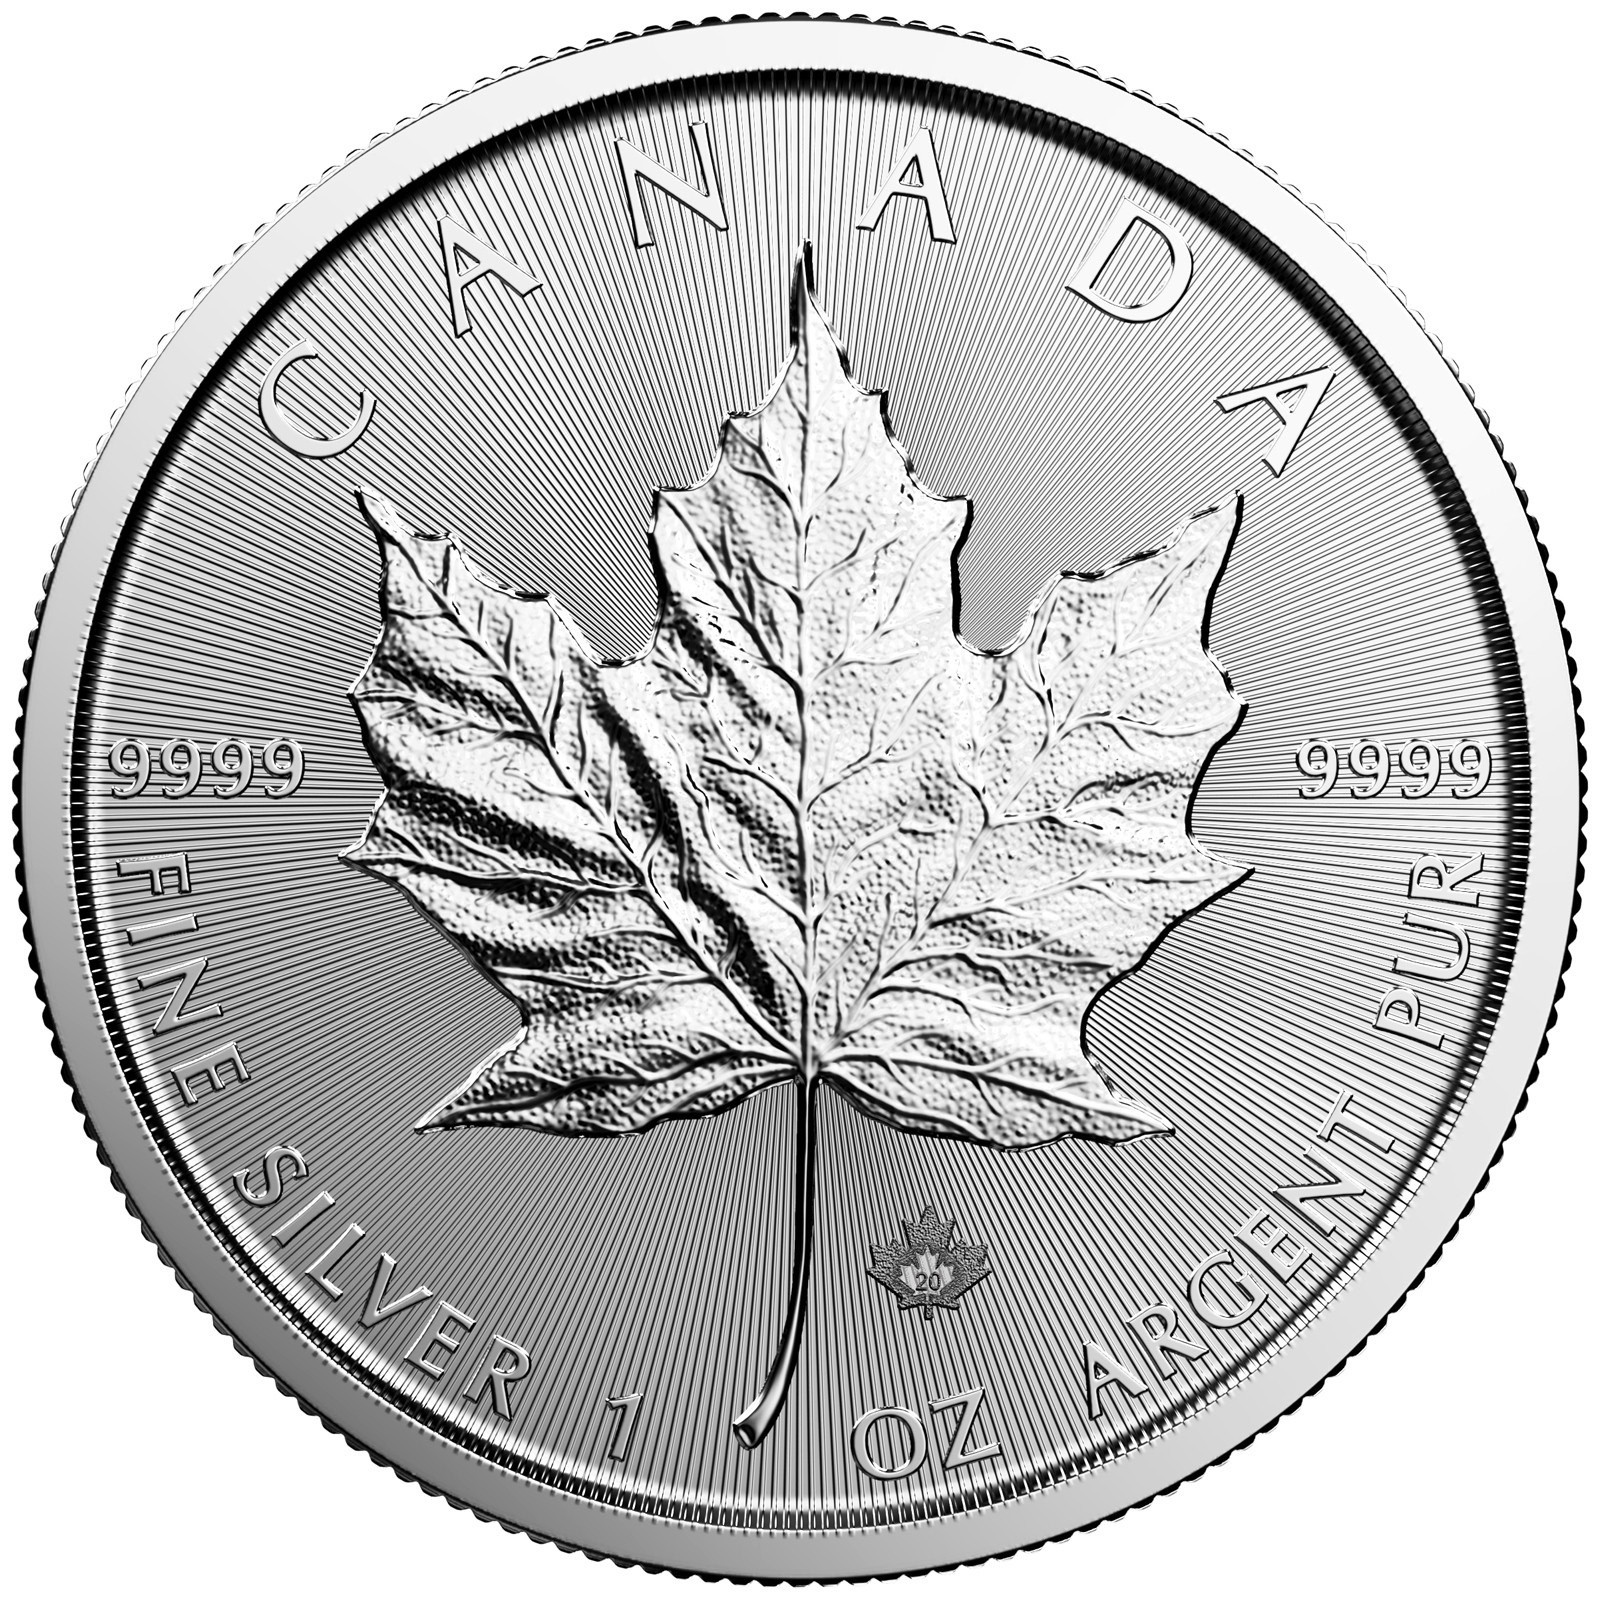 2022 canadian silver maple leaf